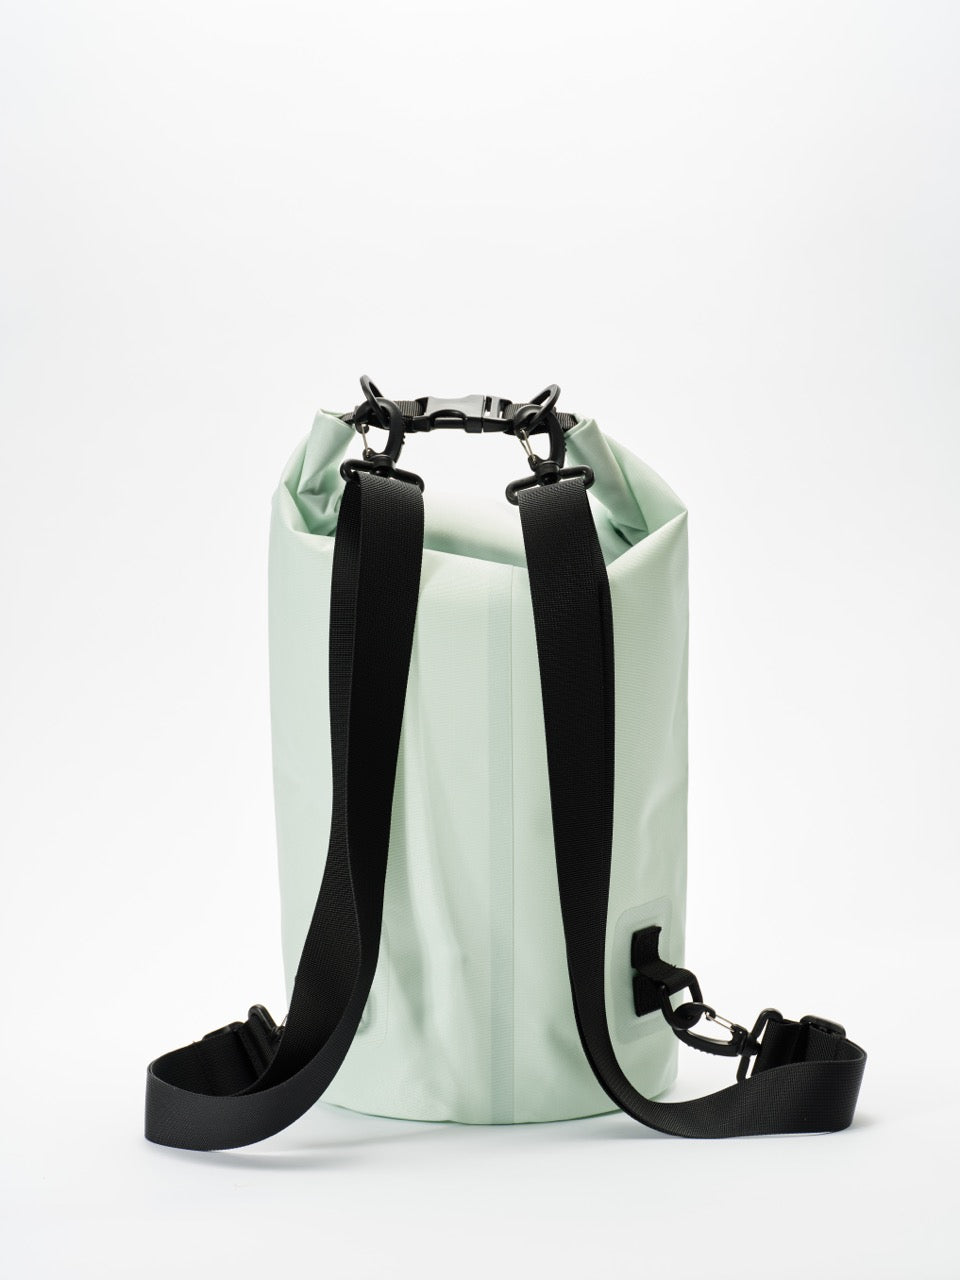 Rhy Böötle - 20 Liter Dry Bag - Wave Green